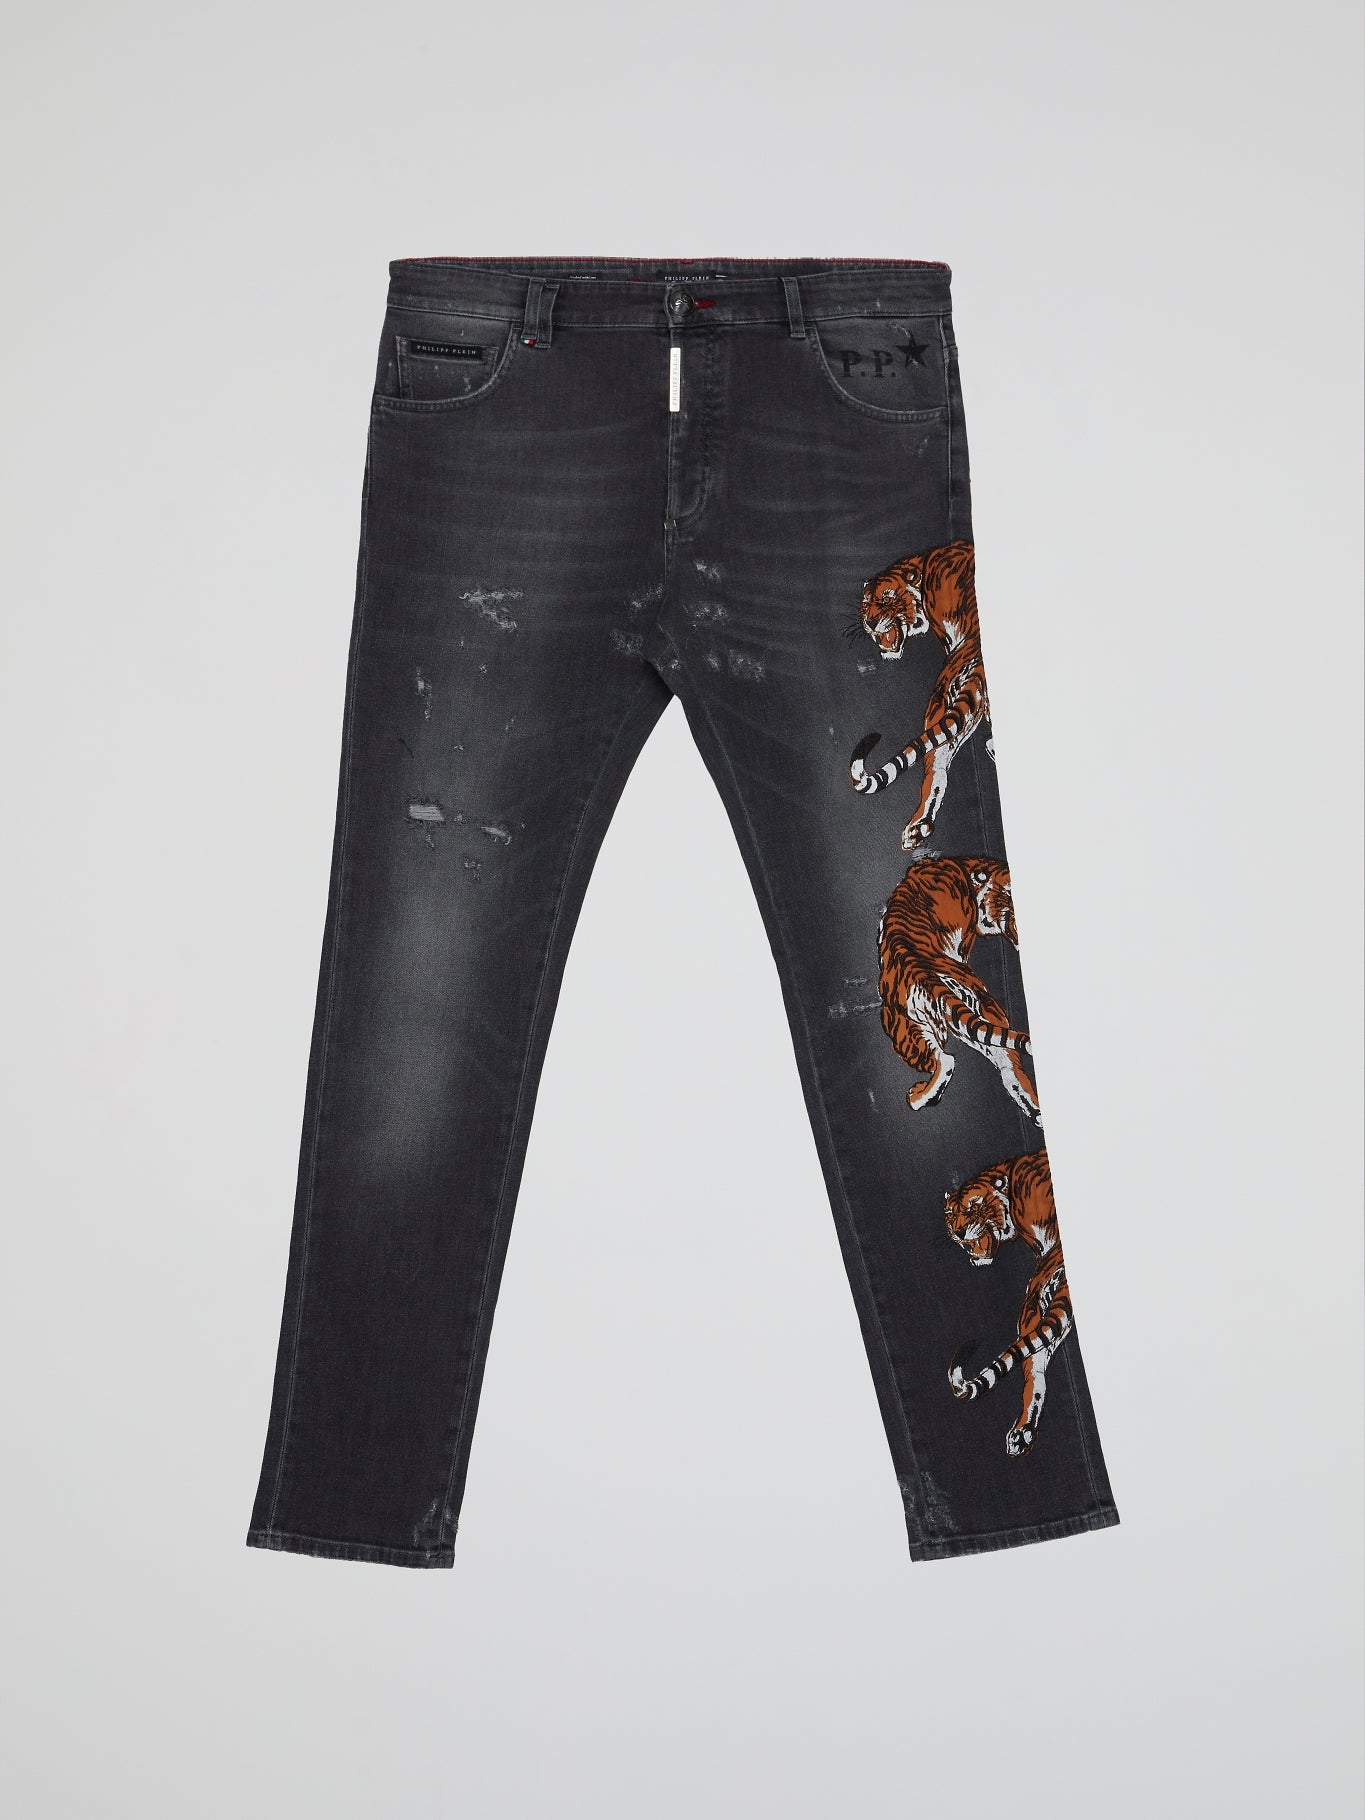 Black Tiger Print Jeans